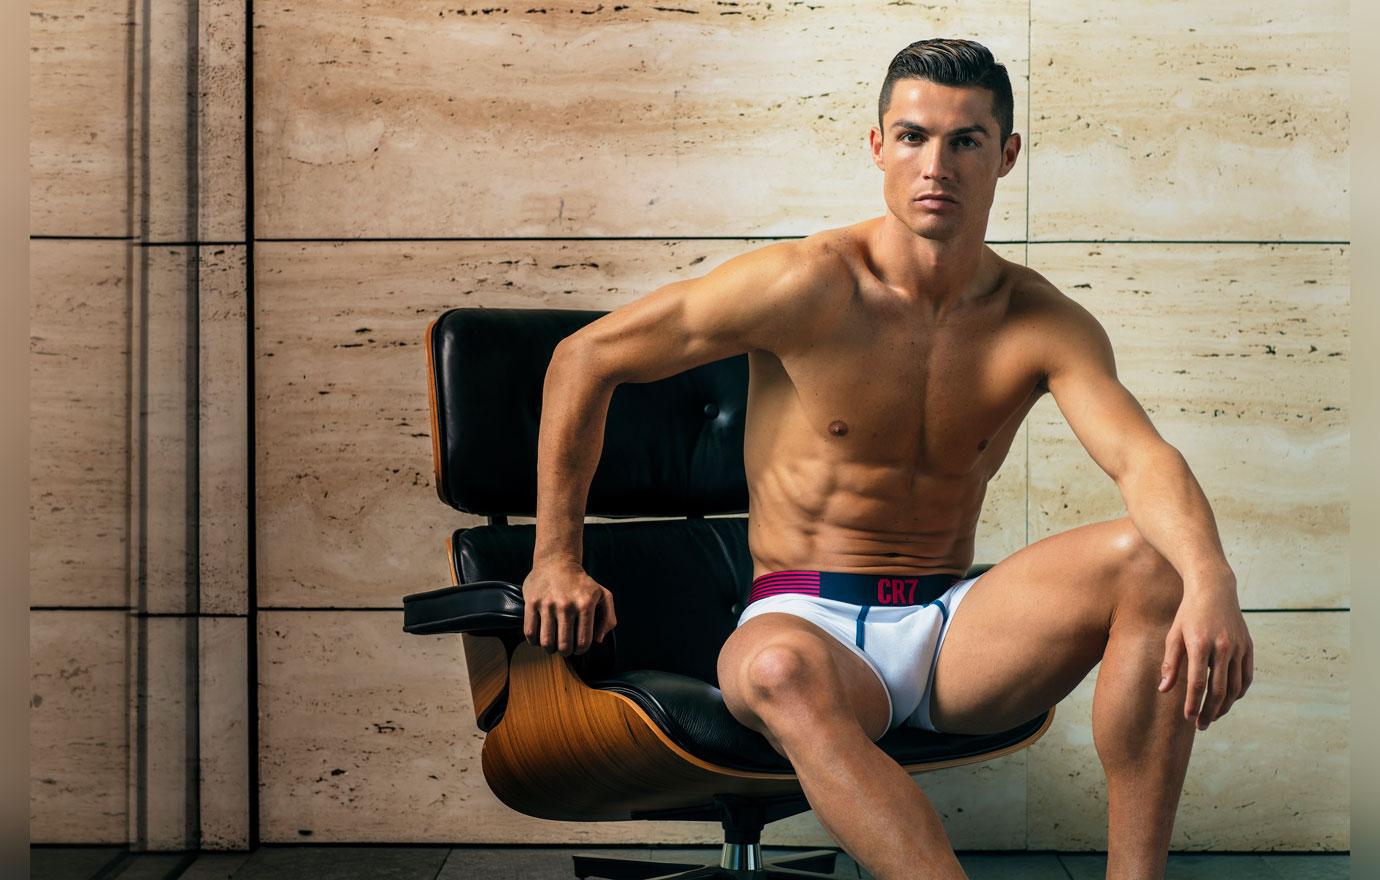 Cristiano Ronaldo Strips Down to His Underwear During Soccer Match: Photo  4497149, Cristiano Ronaldo, Shirtless, Sports Photos